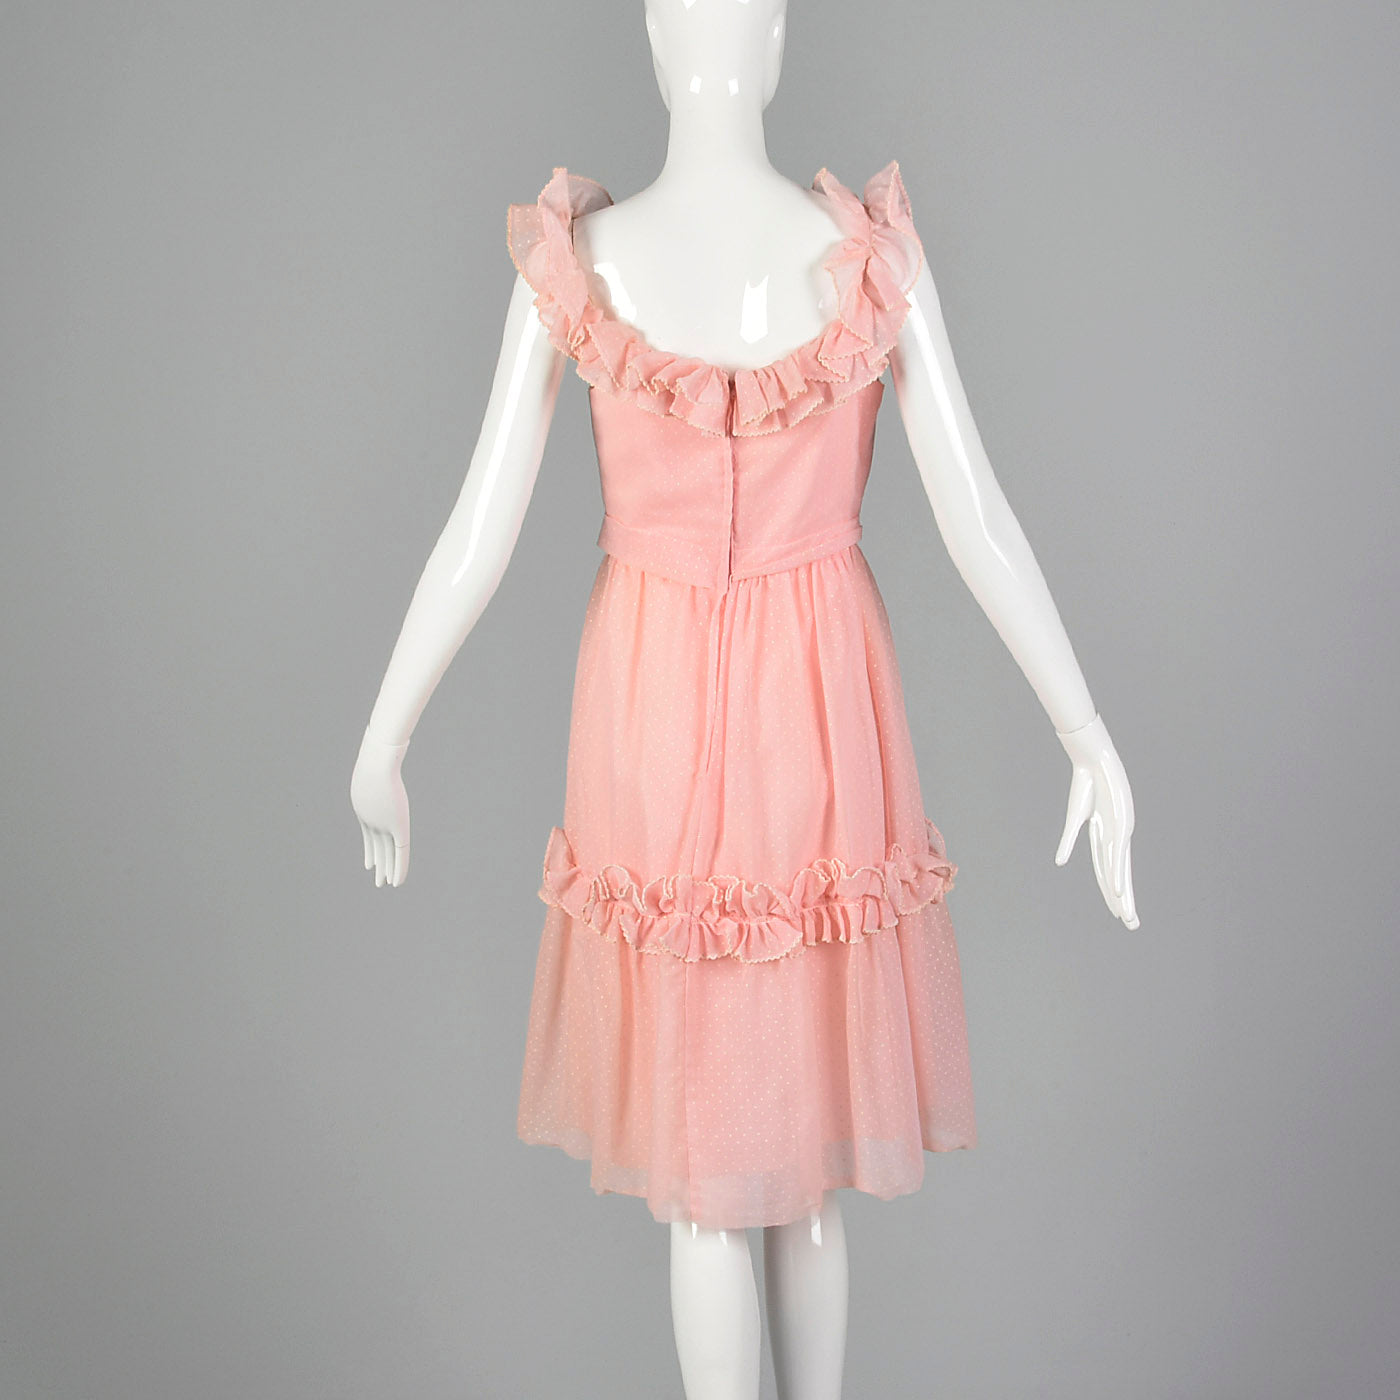 1960s Pink Swiss Dot Dress with Ruffle Trim